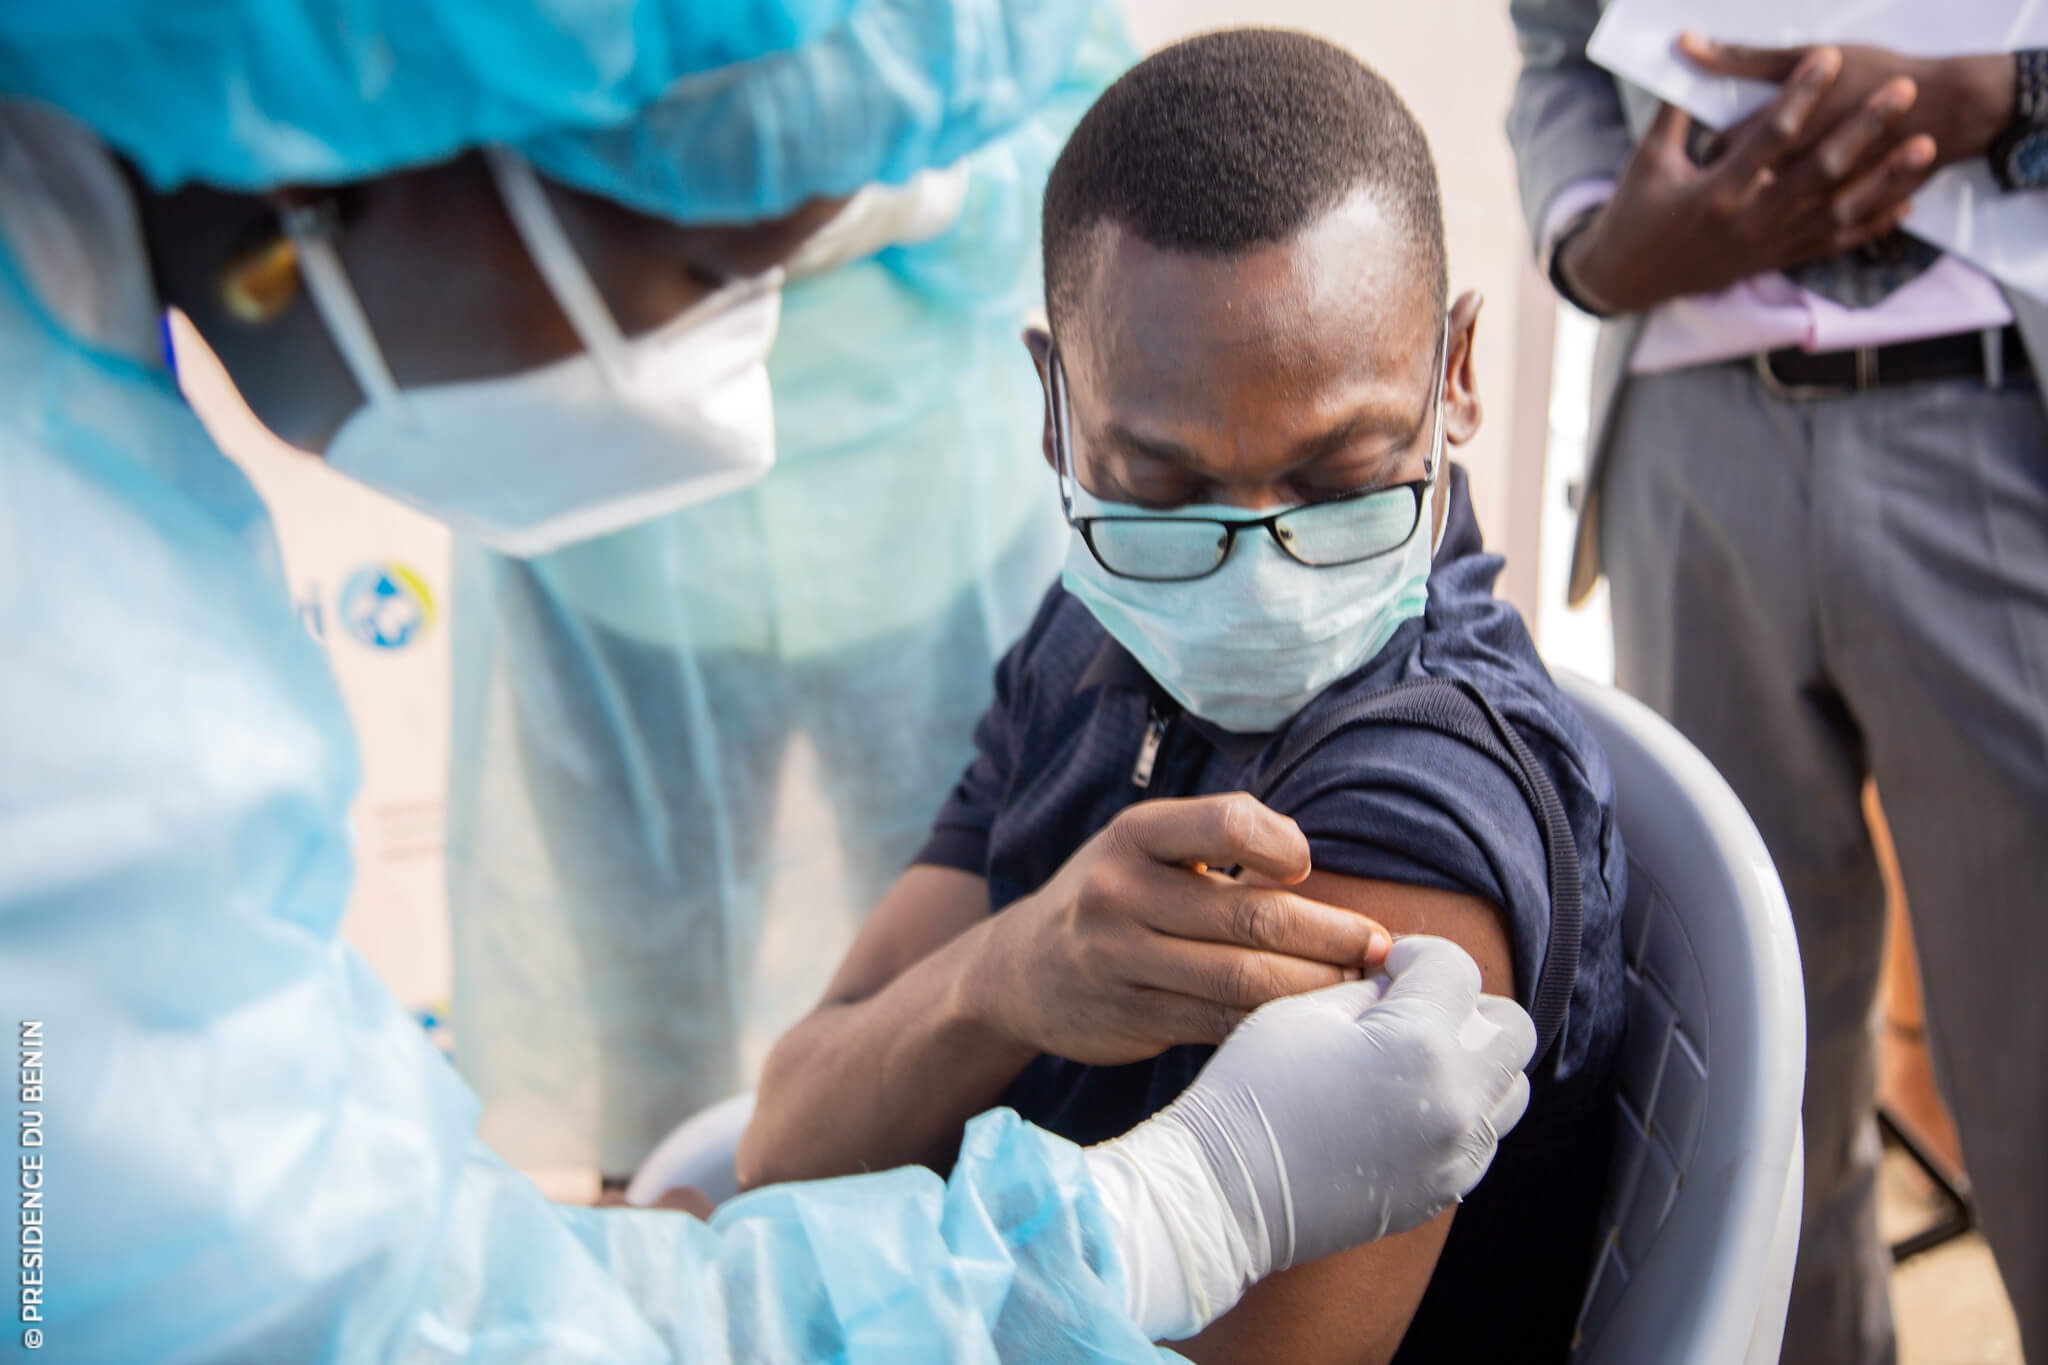 Vaccinatie tegen COVID-19 in Benin in maart 2021. Présidence de la République du Bénin - Flickr